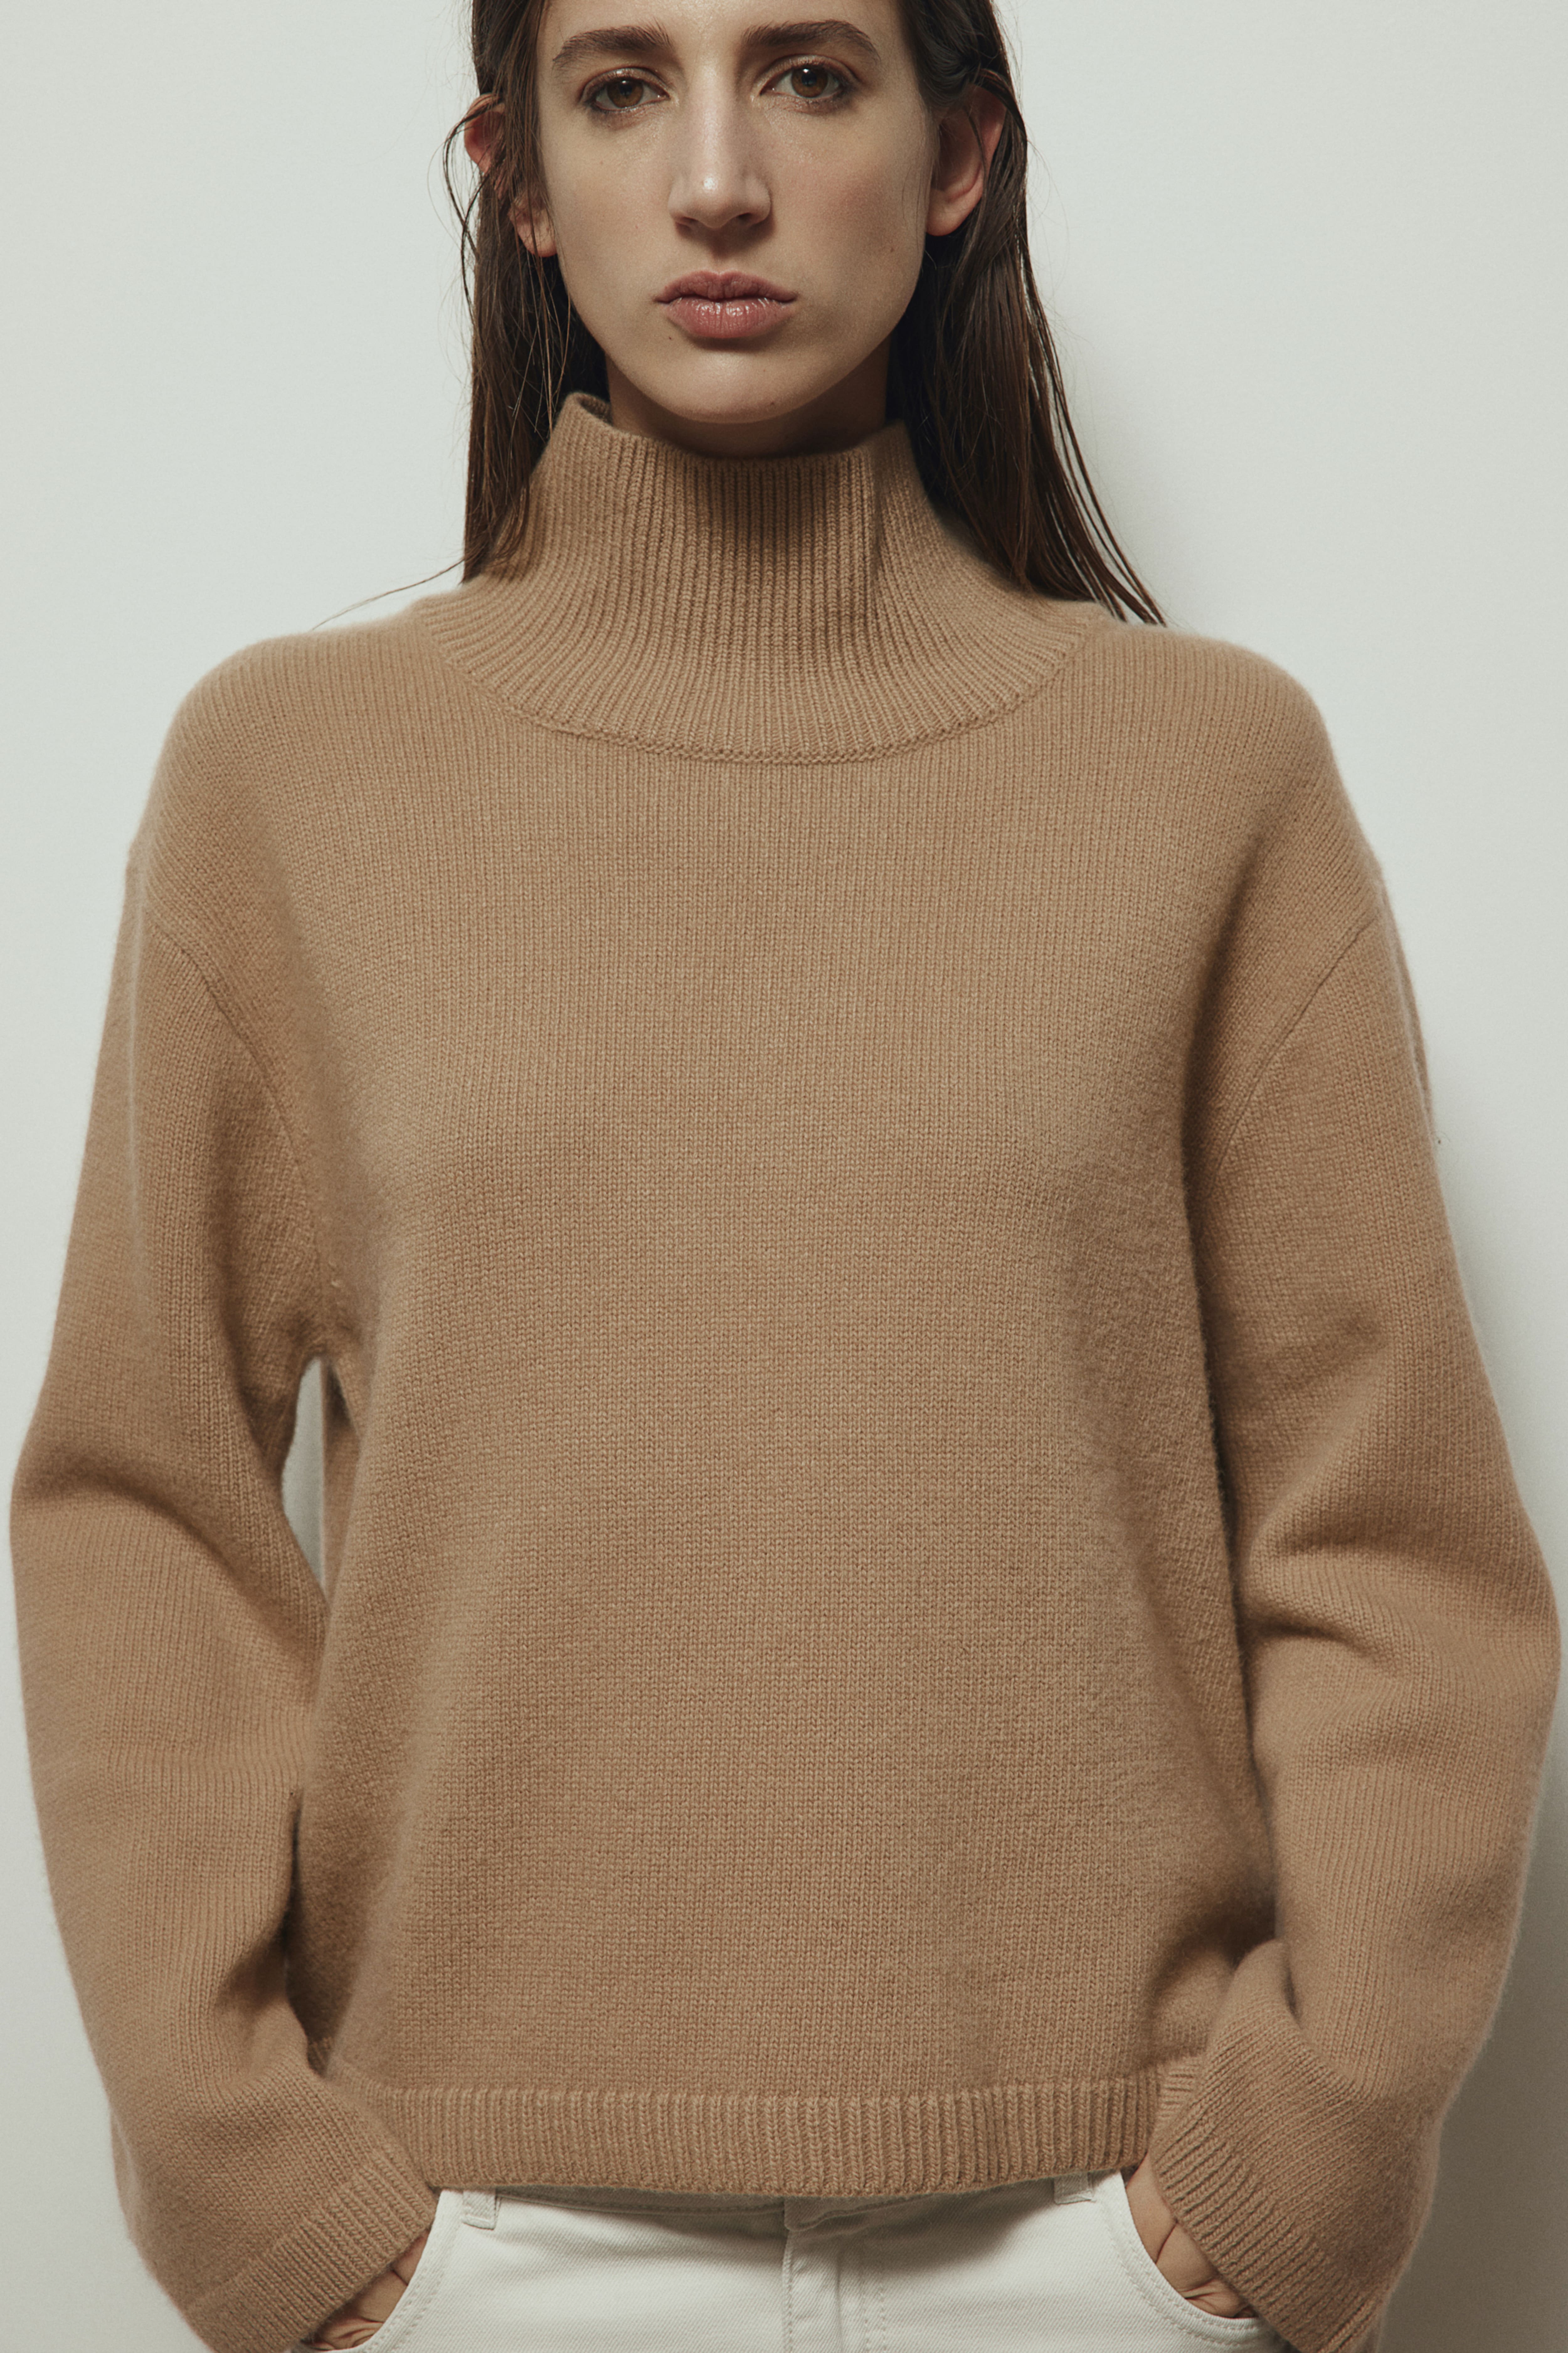 Women's Cashmere Sweaters | Cashmere Turtlenecks